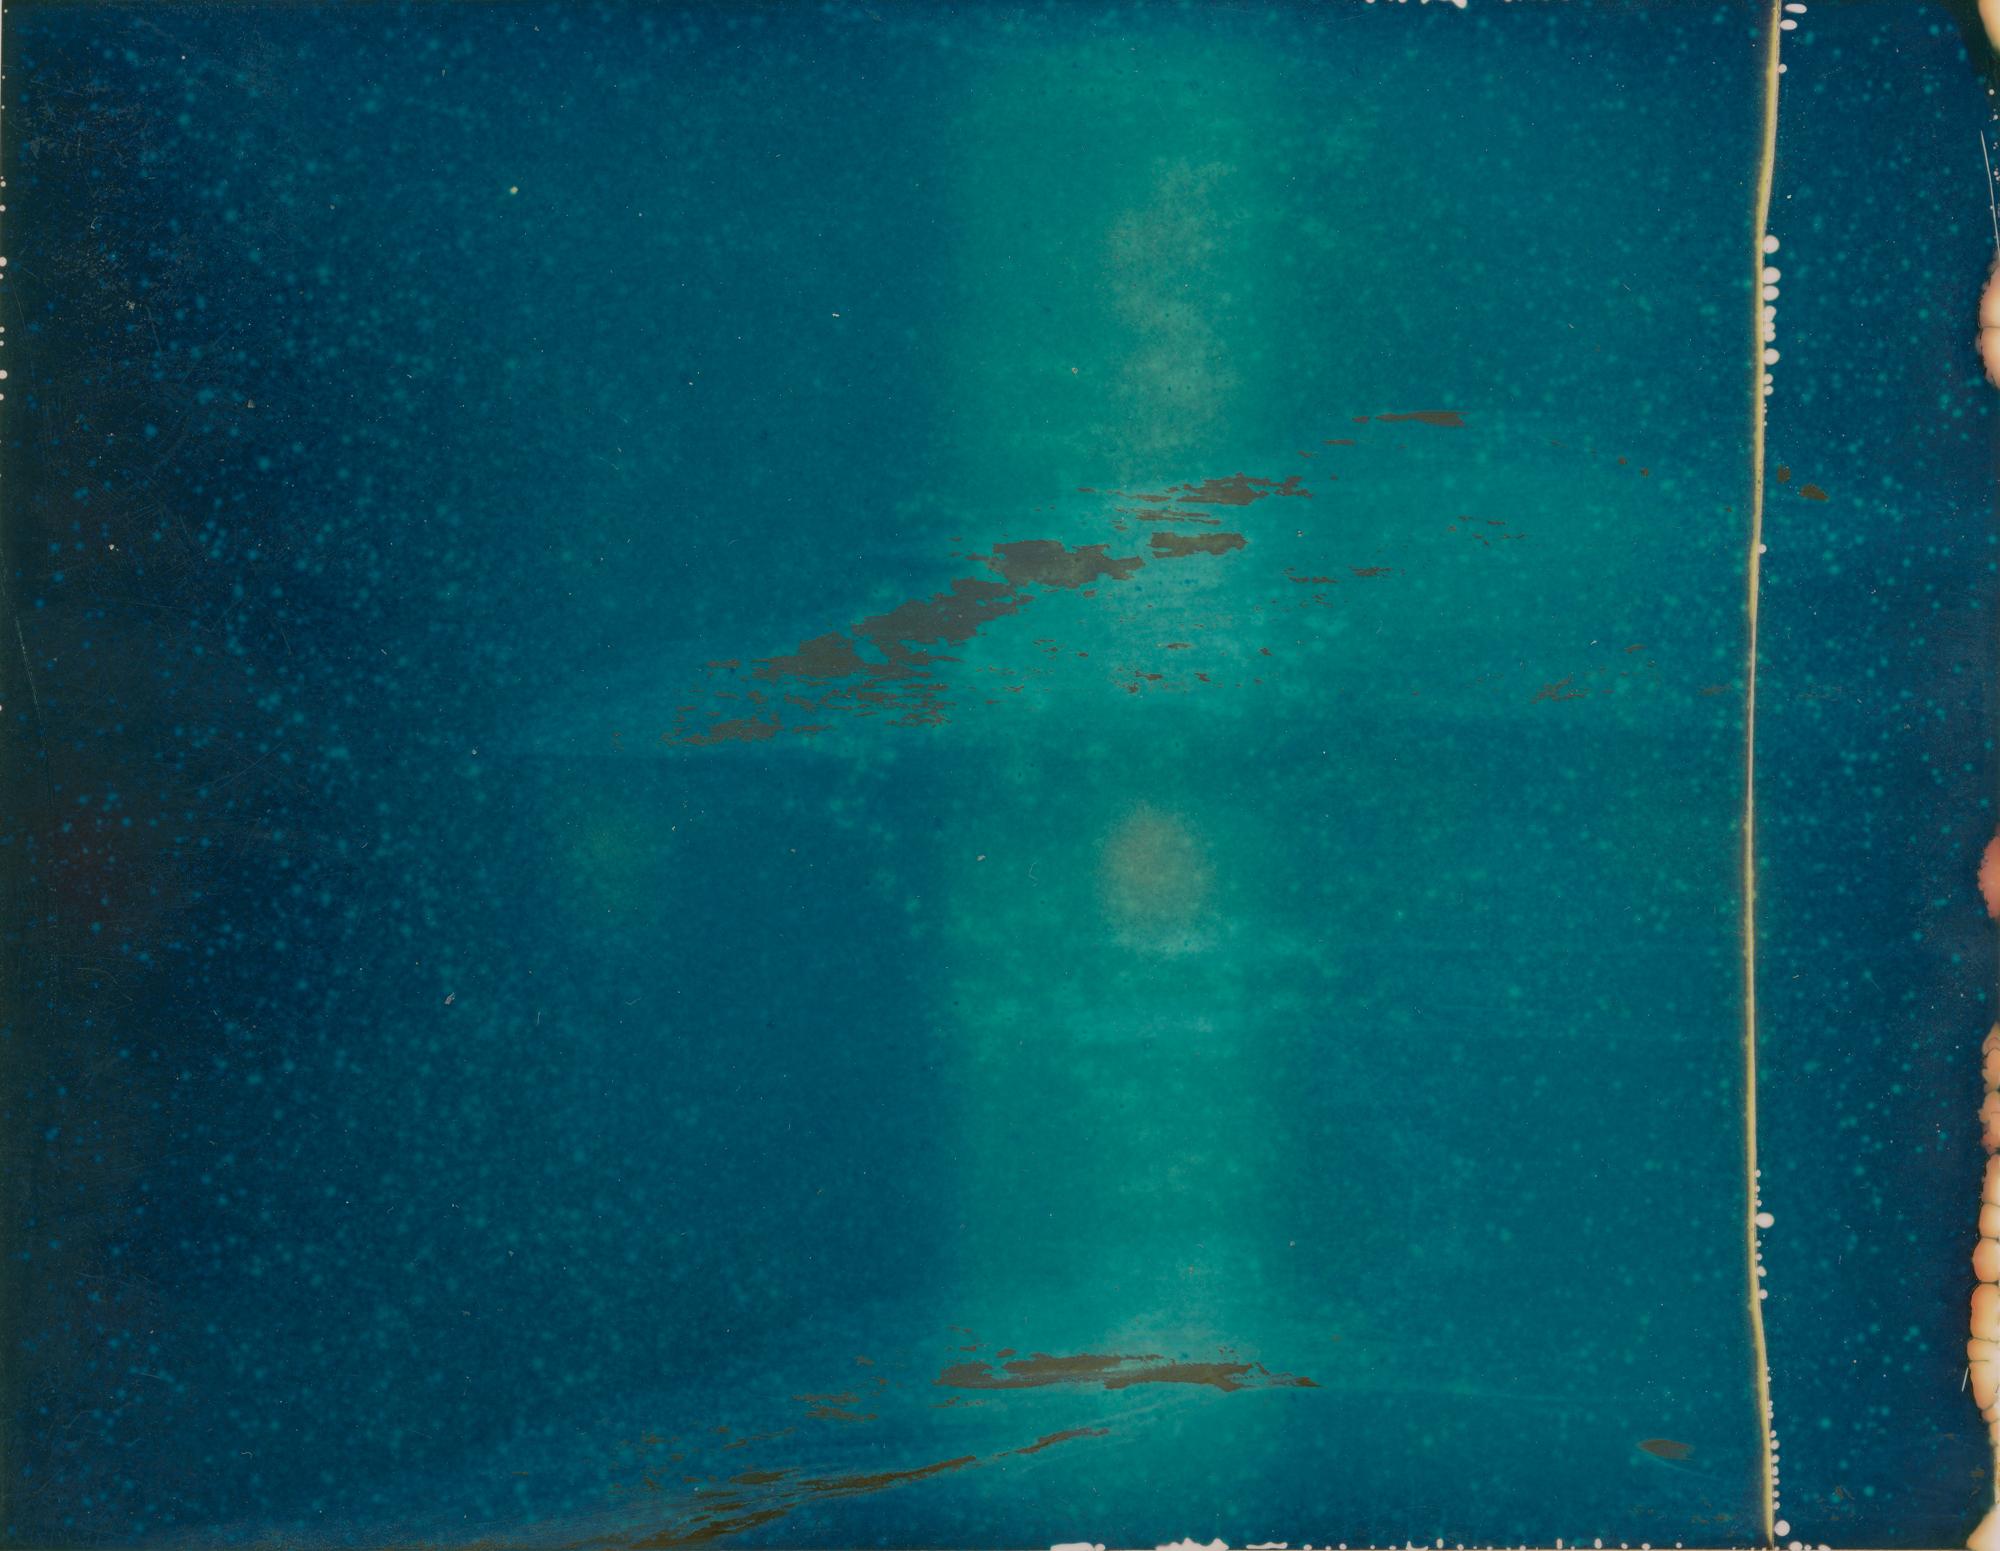 Stefanie Schneider Landscape Photograph - Blue (Deconstructivism) - Contemporary, Expired Polaroid